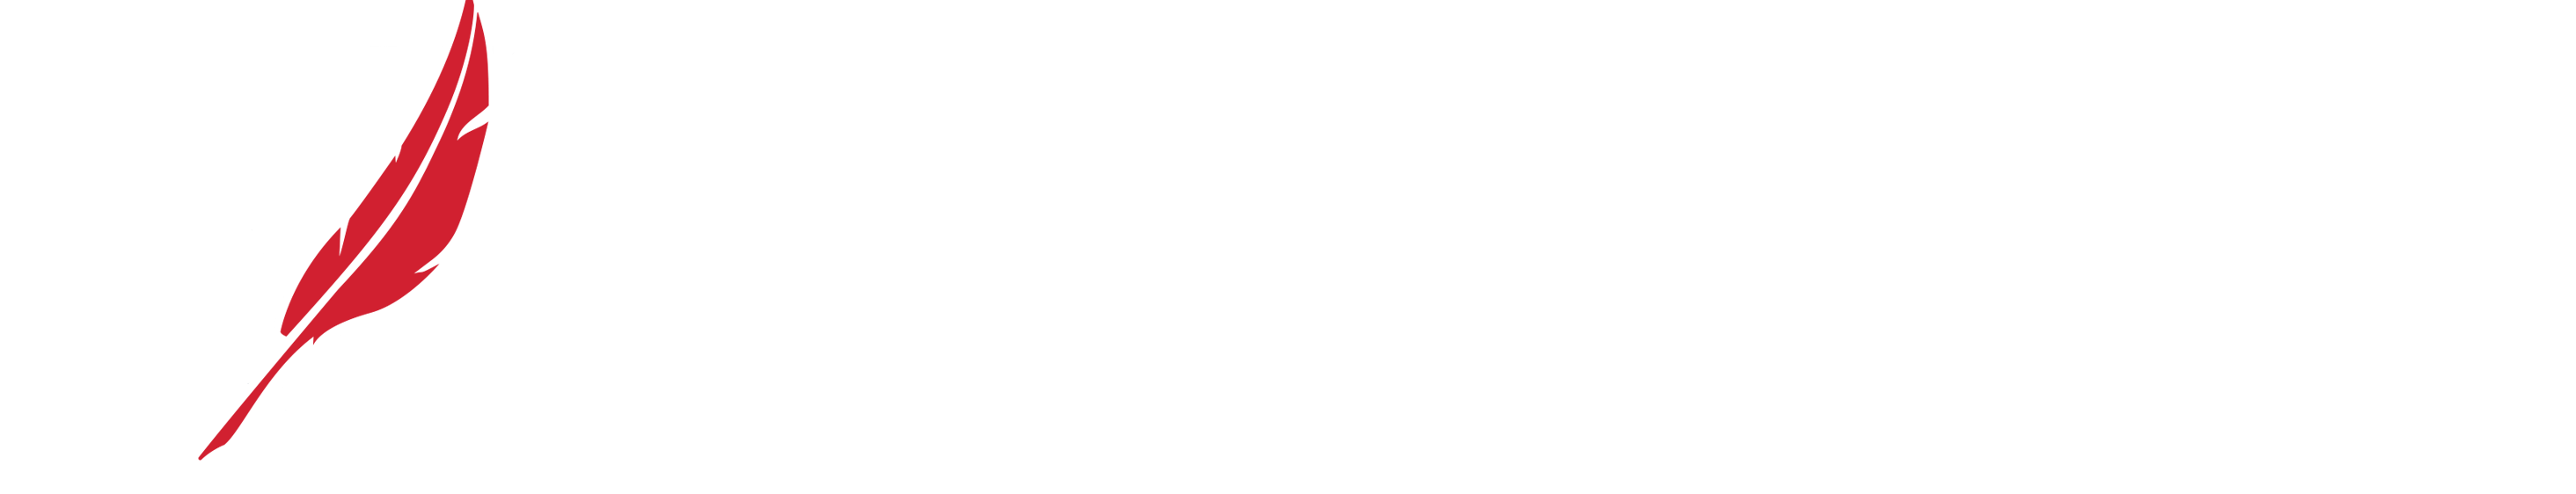 Article V Simulation Logo